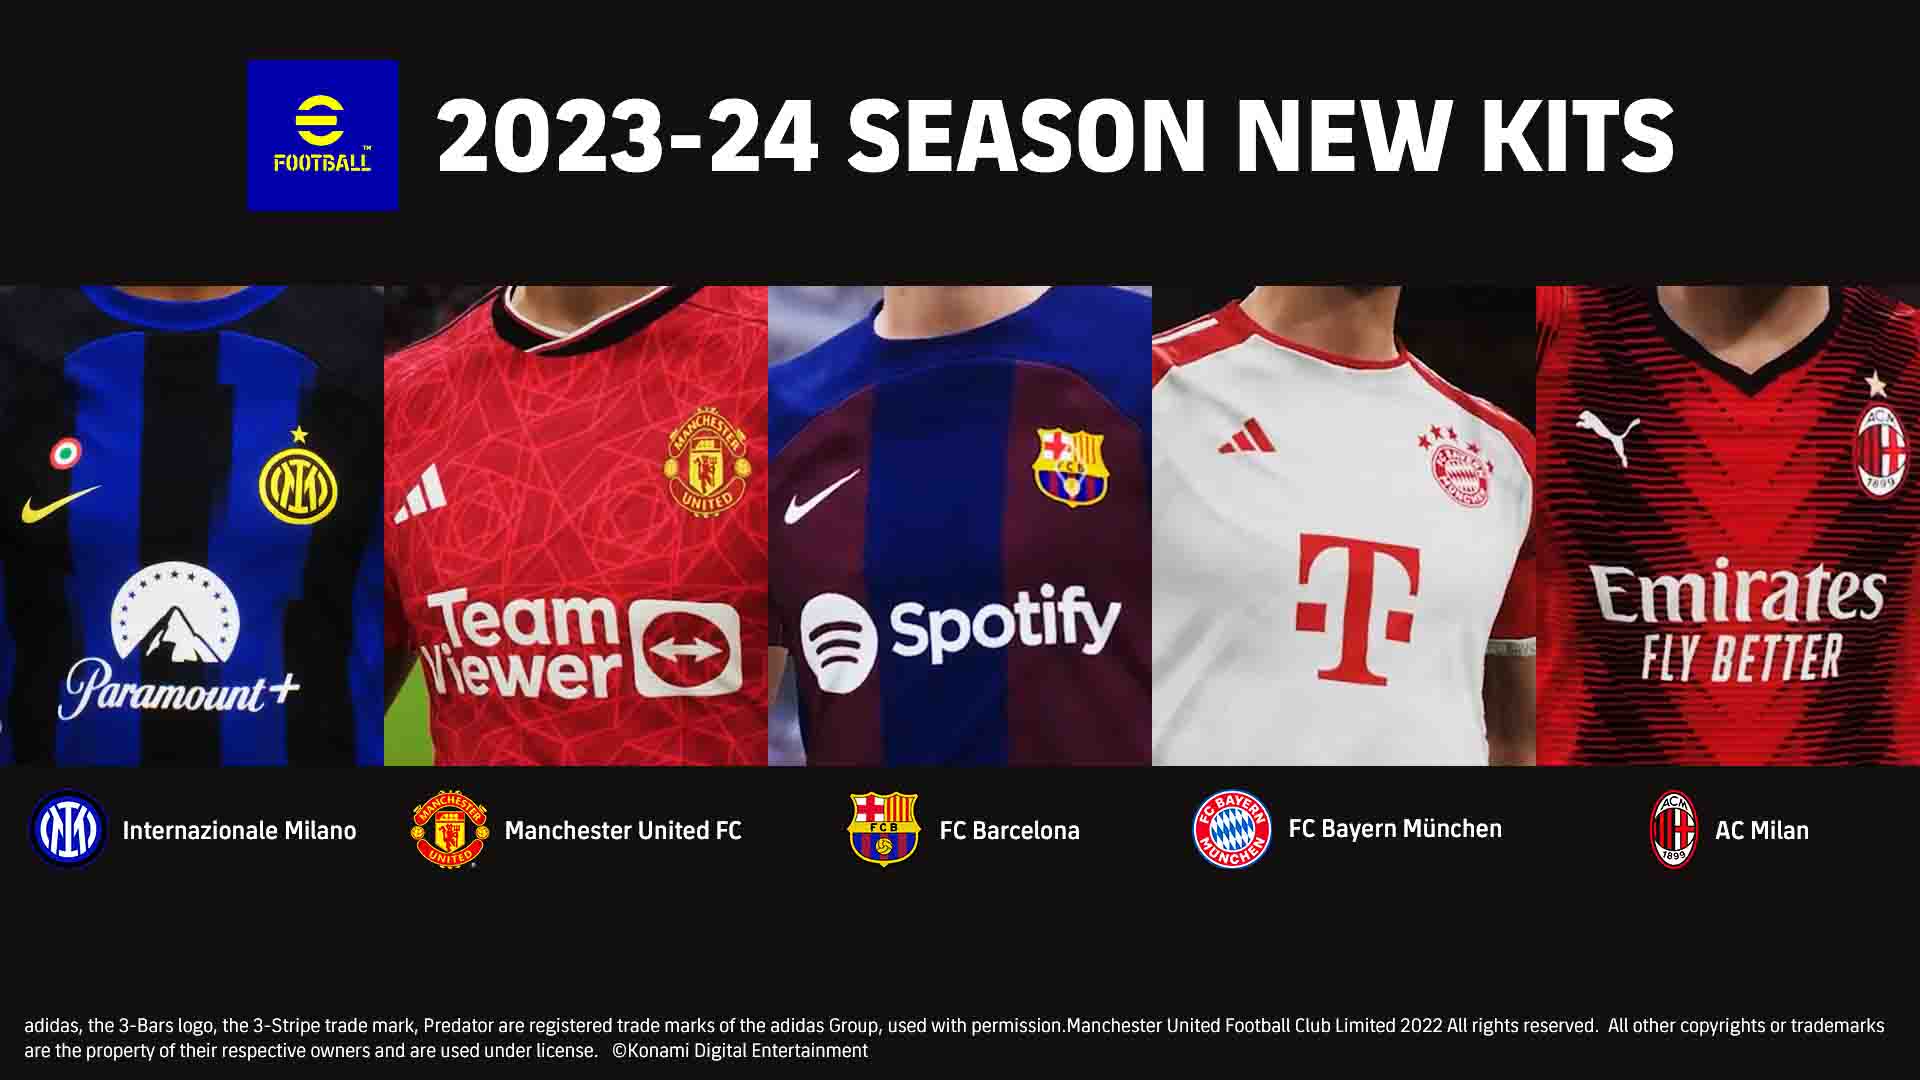 eFootball Season 0 update is here, updating kits for 23/24 season